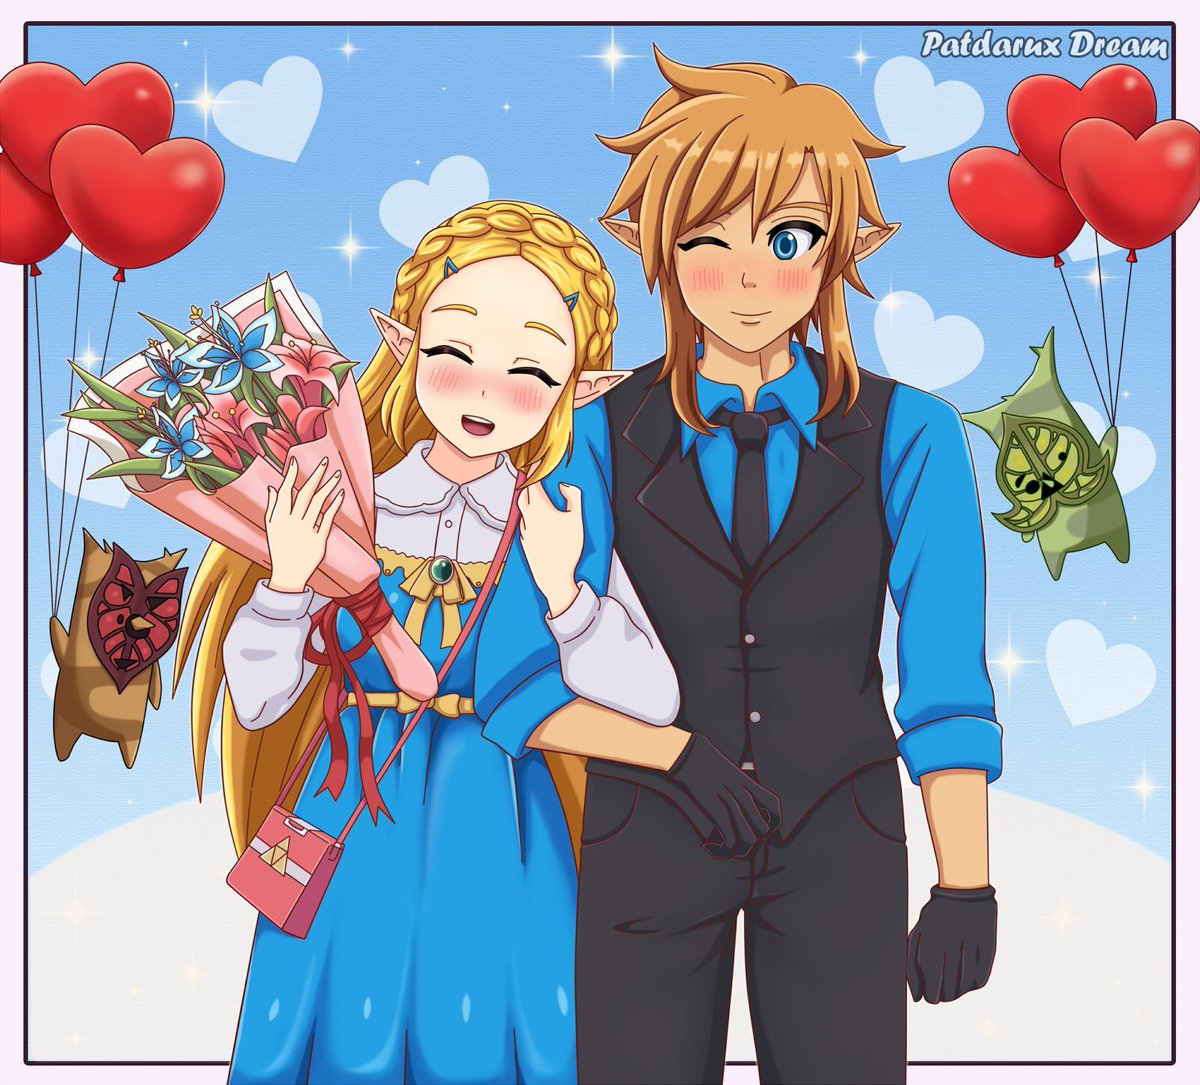 Link and Zelda for Valentine's Day! 

#zeldabreathofthewild #linkxzelda #zelink #patdarux #ValentinesDay